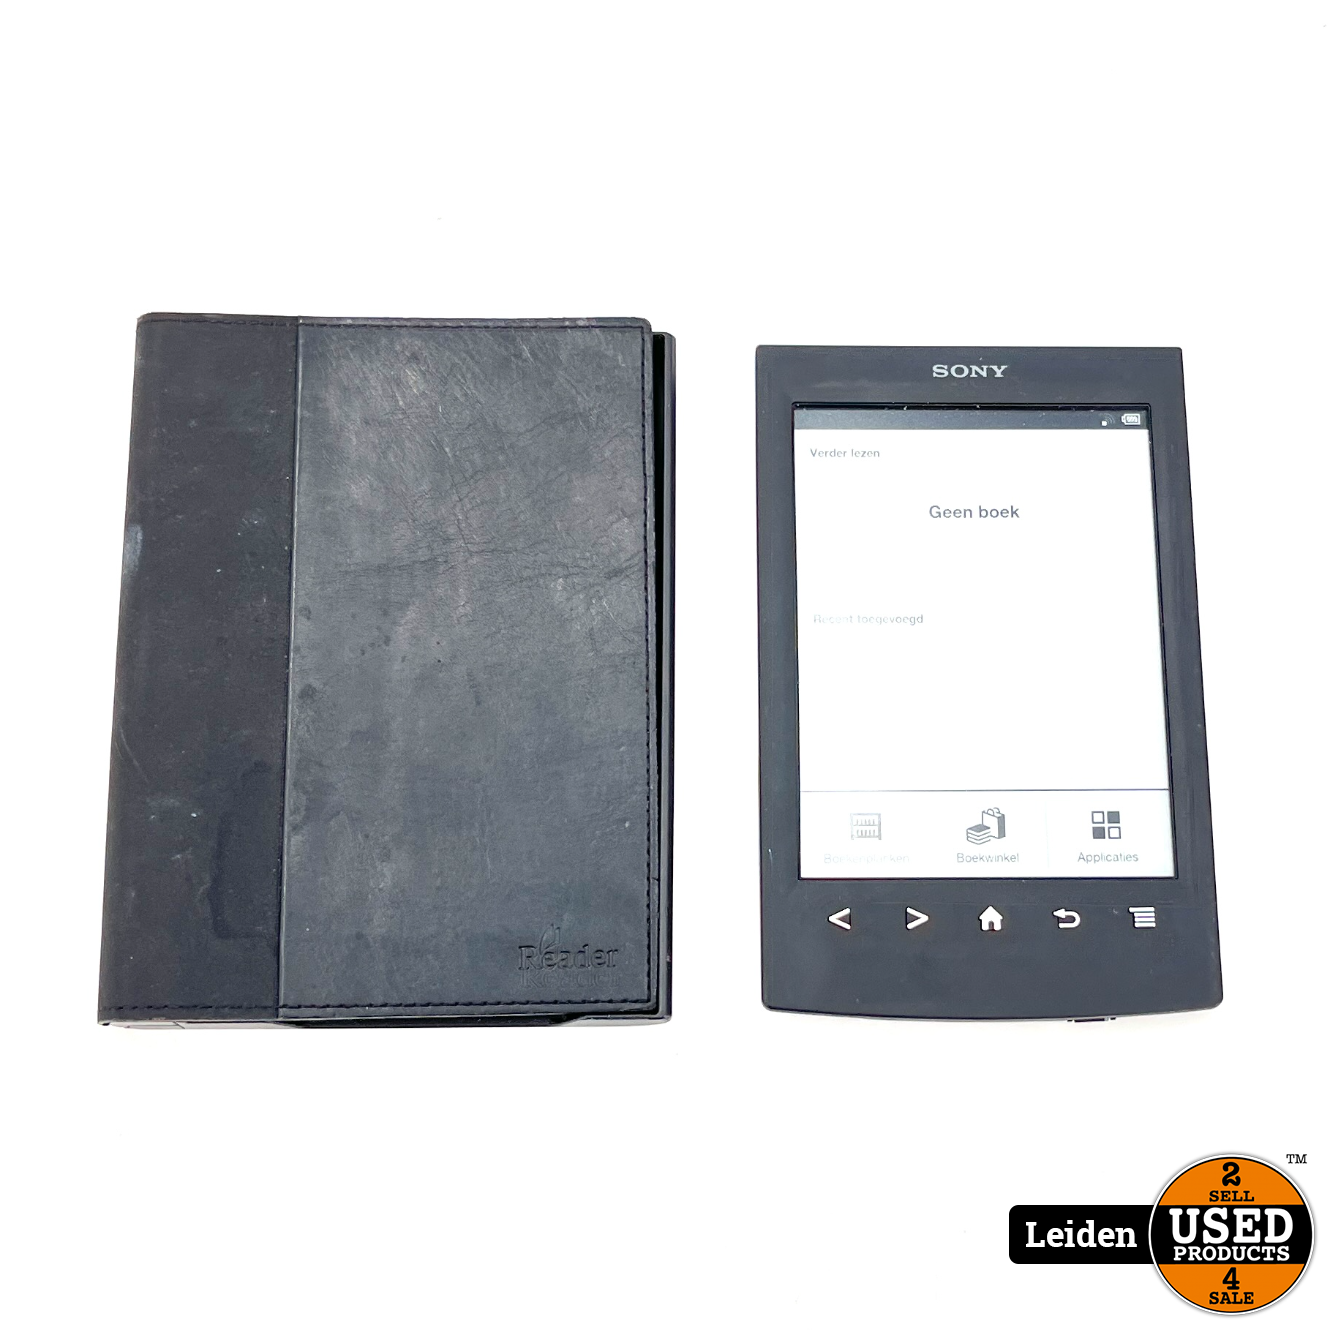 Klagen selecteer solo Sony Reader Touch PRS-T2 - Zwart - Used Products Leiden